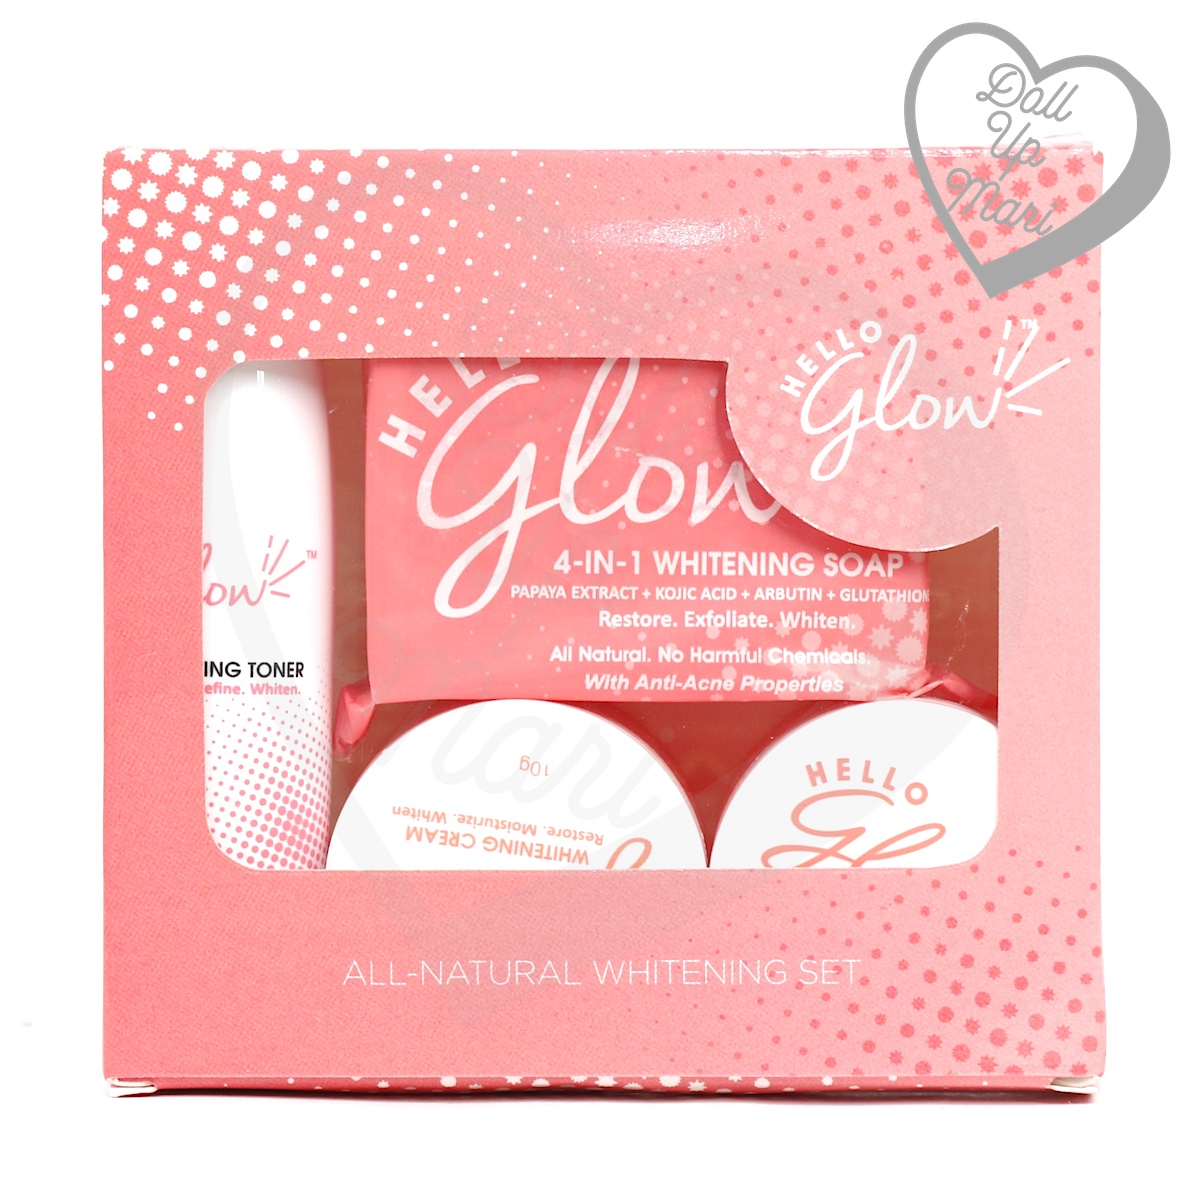 Hello Glow by Ever Bilena Rejuvenating skincare set in box